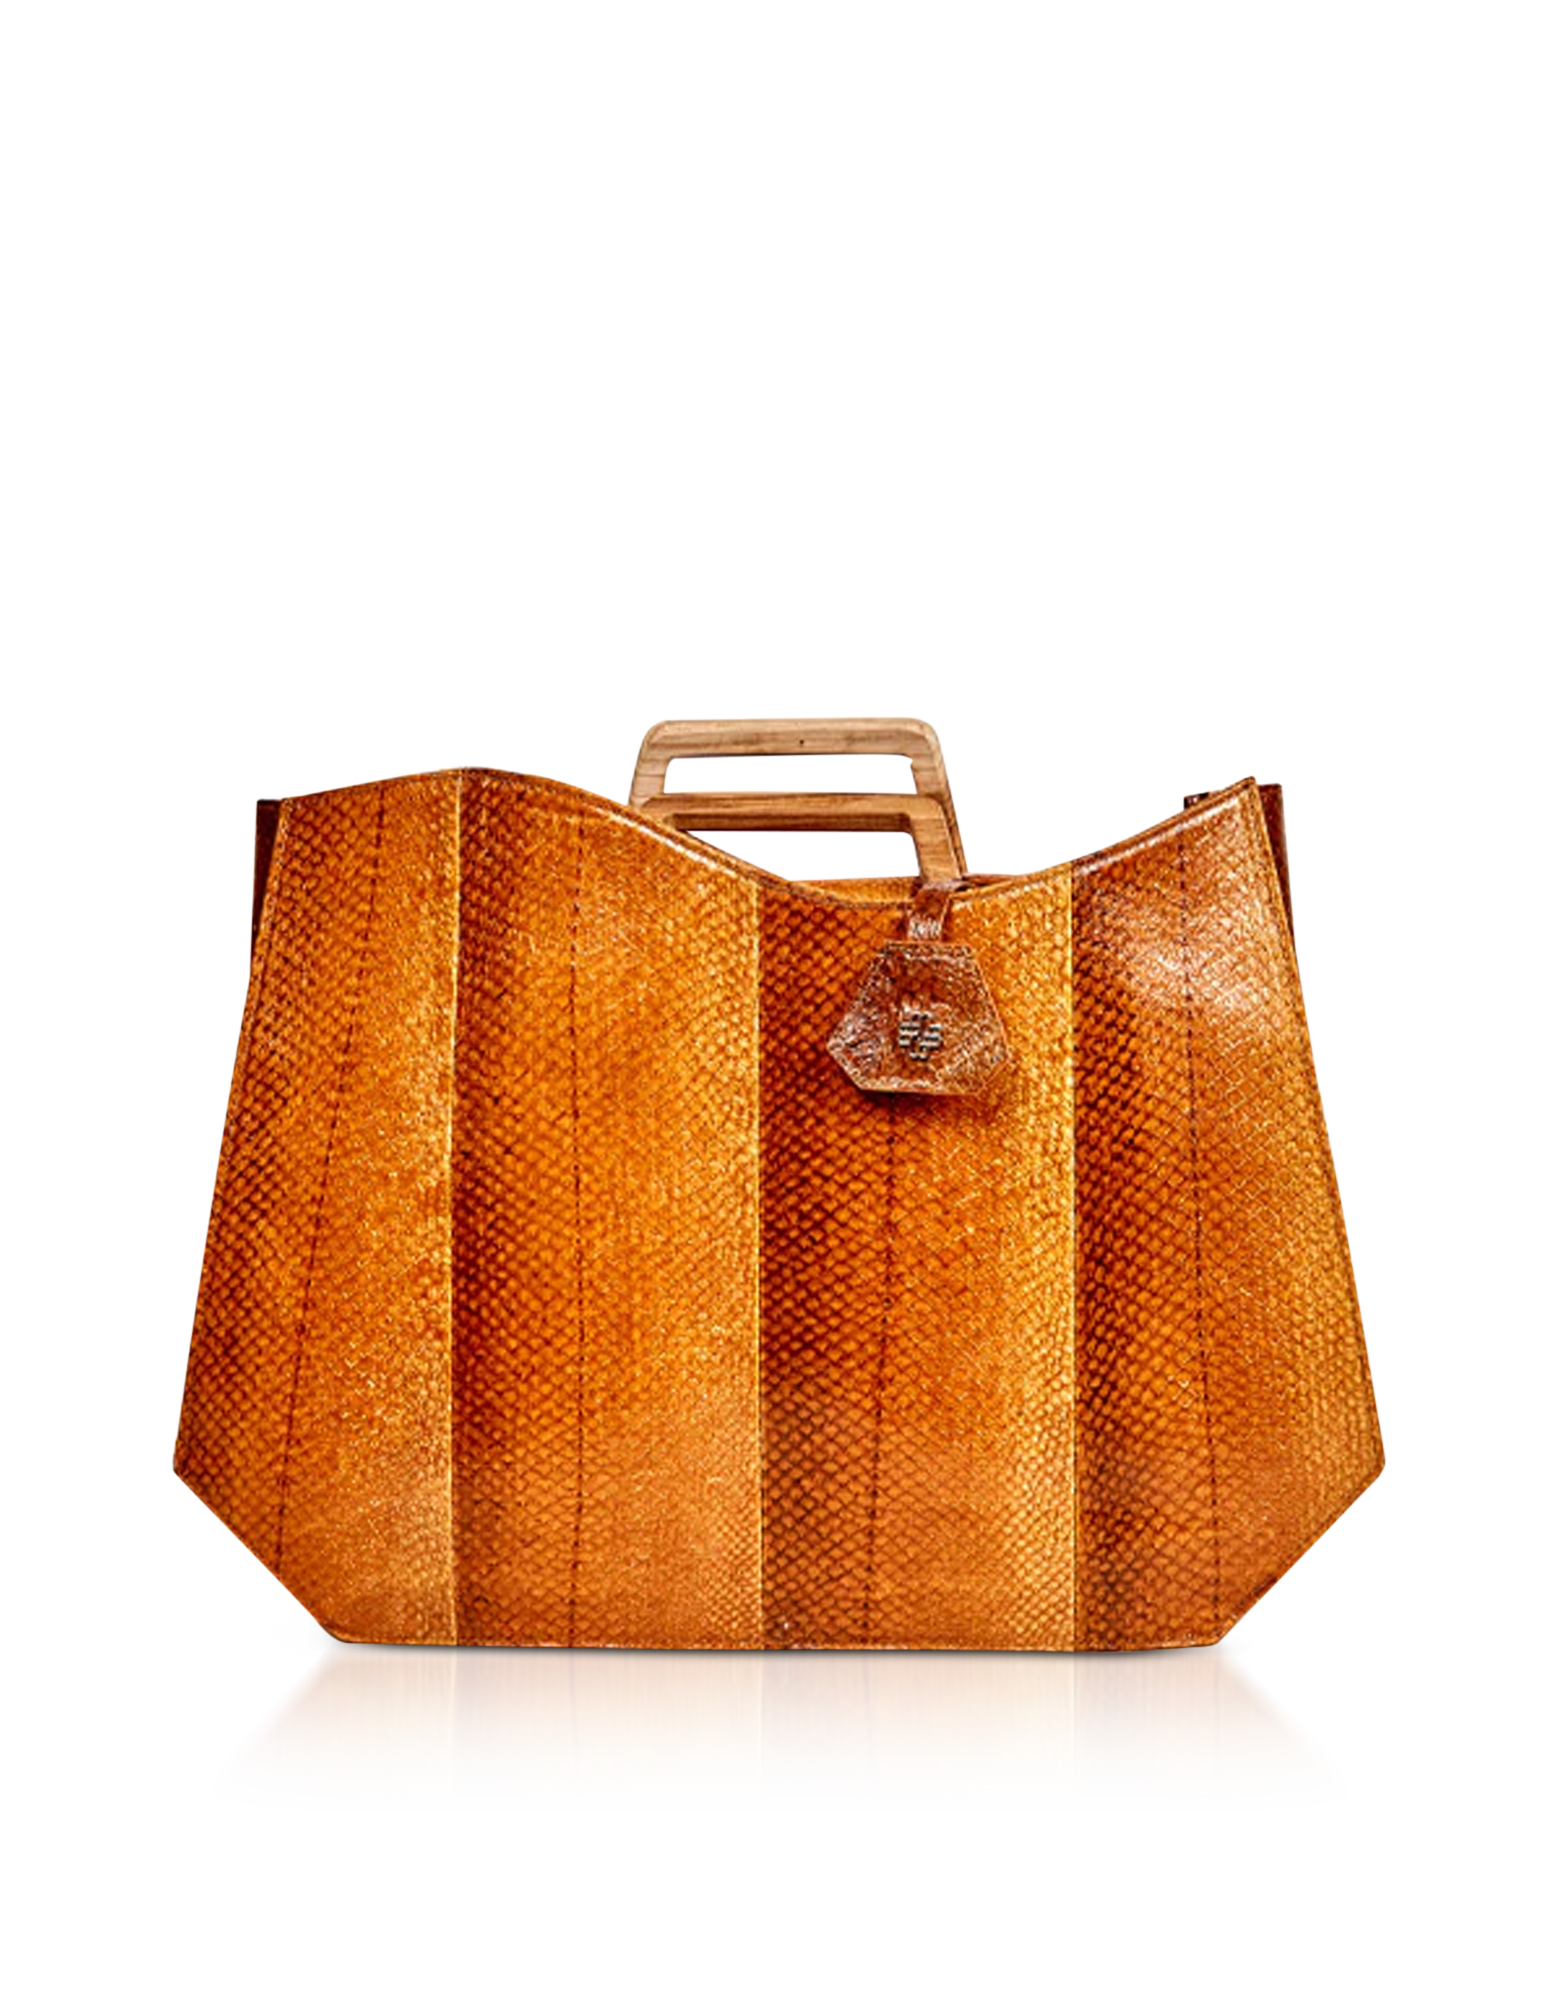 Mayu Salmon Leather Esmeralda Tote Bag